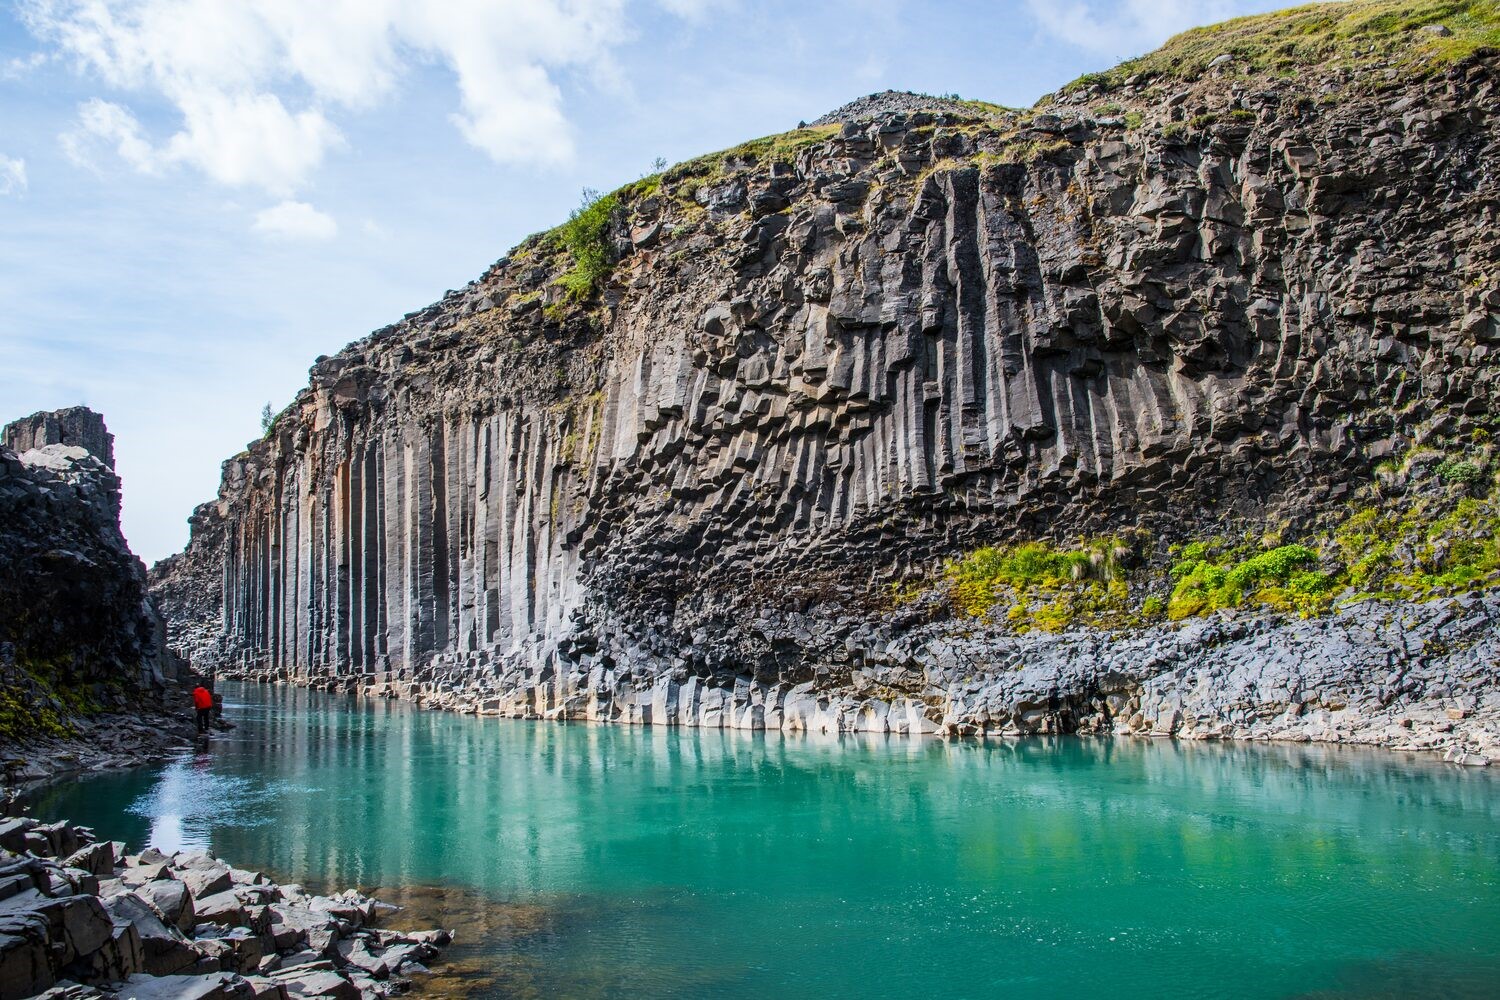 Studlagil basalt rock Canyon in Iceland overlooking sea green glacial river